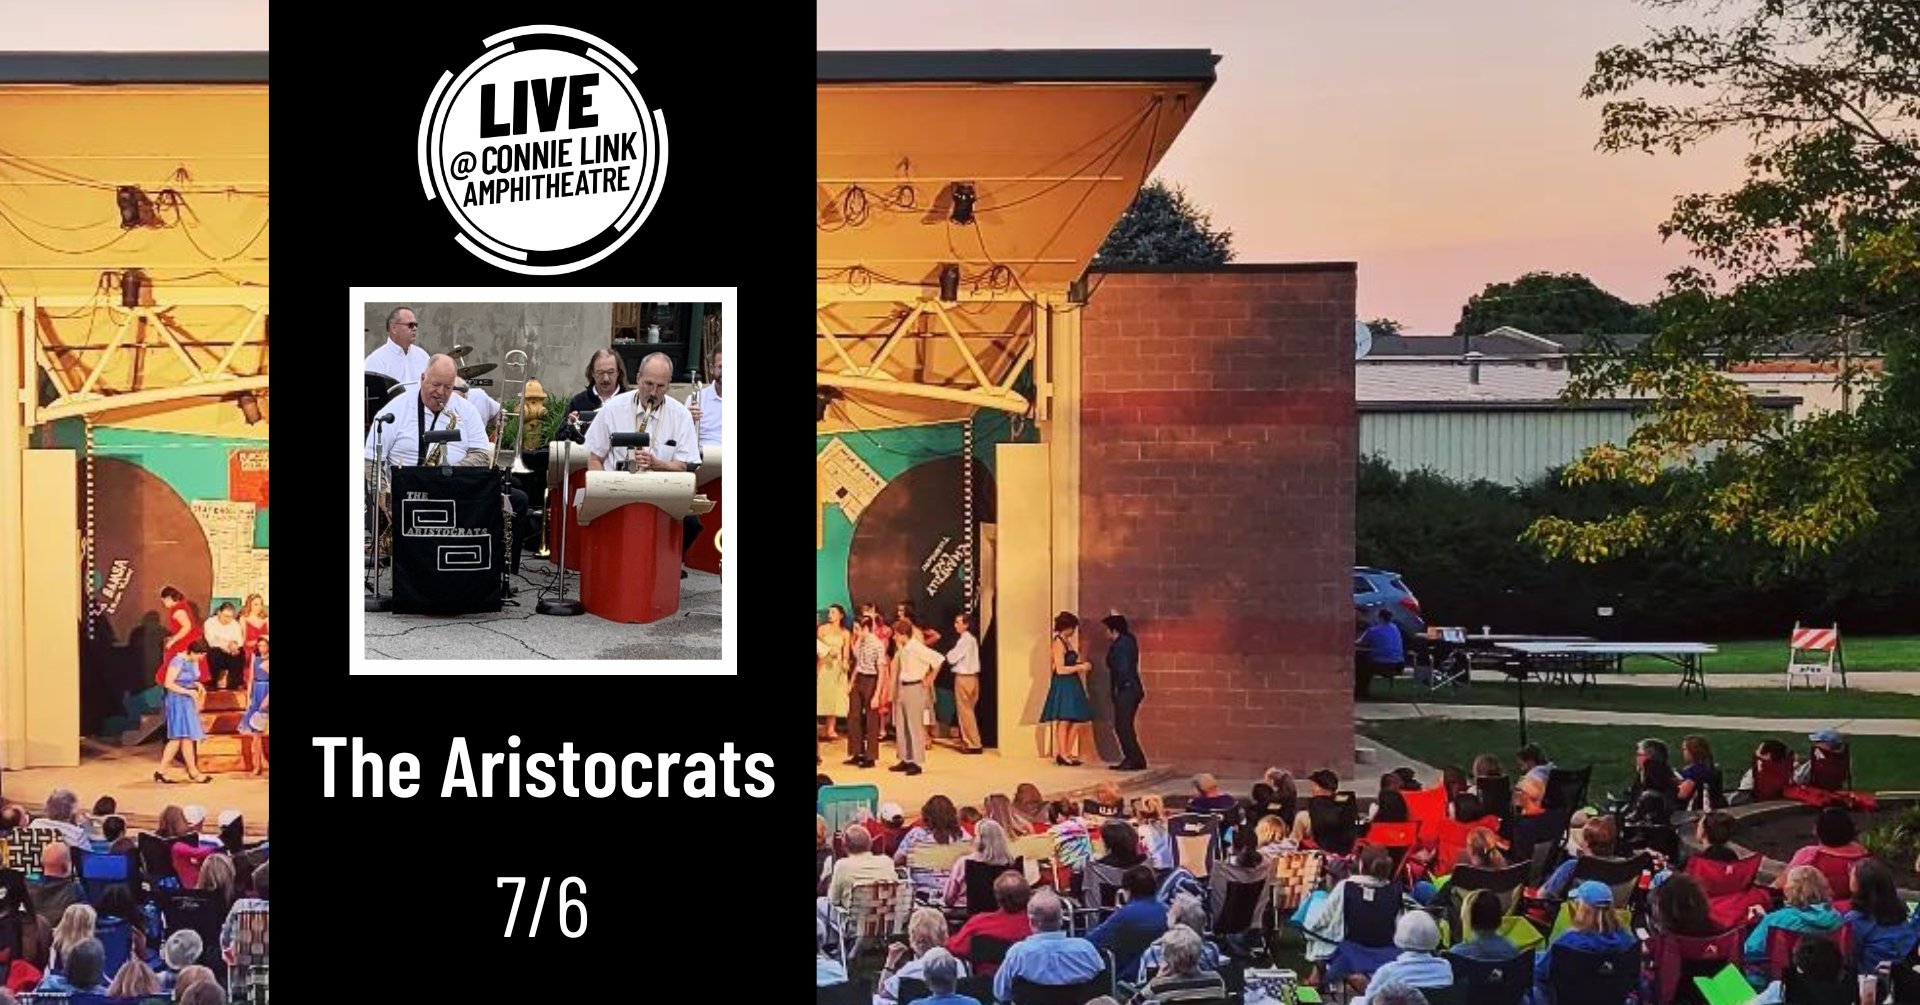 Normal LIVE presents The Aristocrats @ Connie Link Amphitheatre